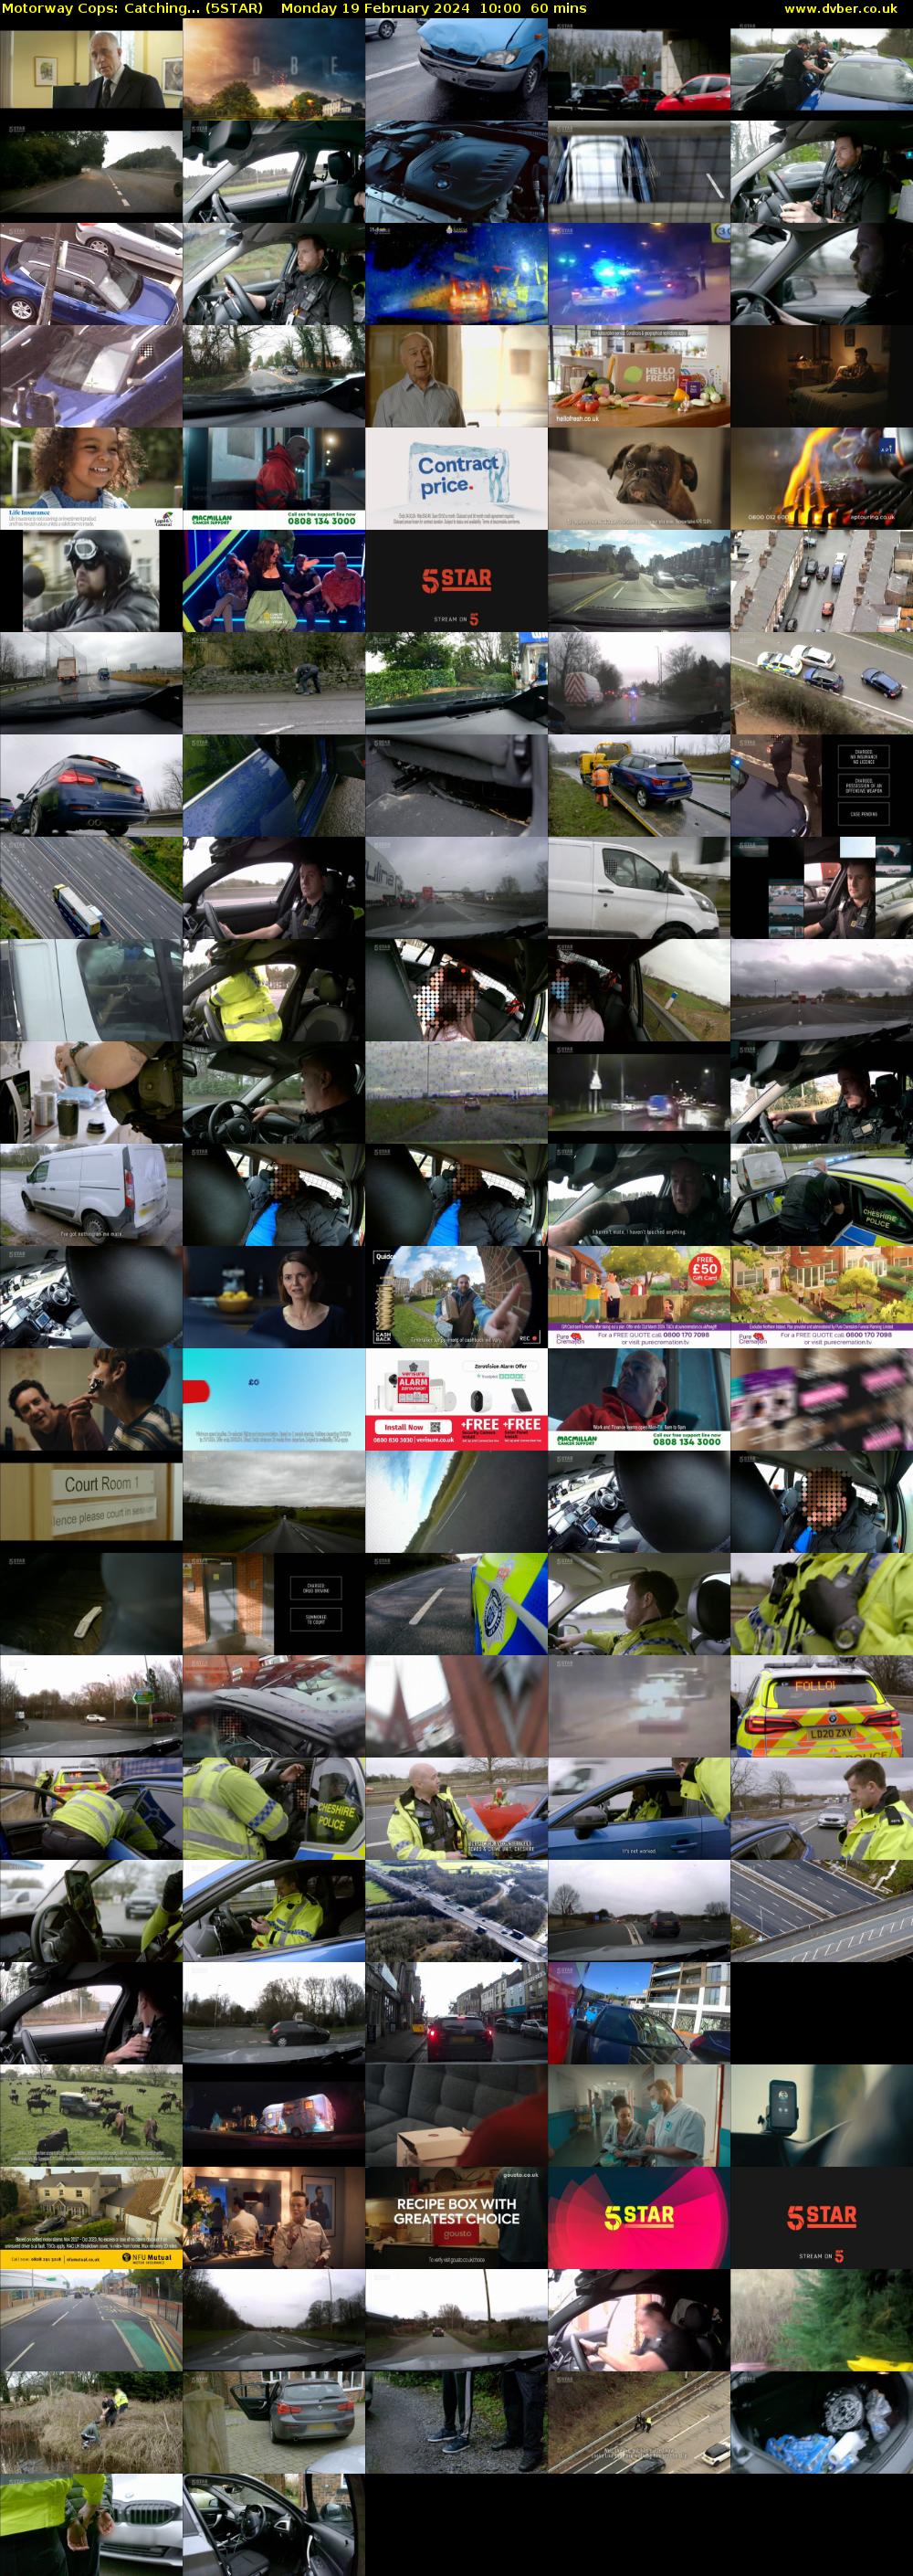 Motorway Cops: Catching... (5STAR) Monday 19 February 2024 10:00 - 11:00